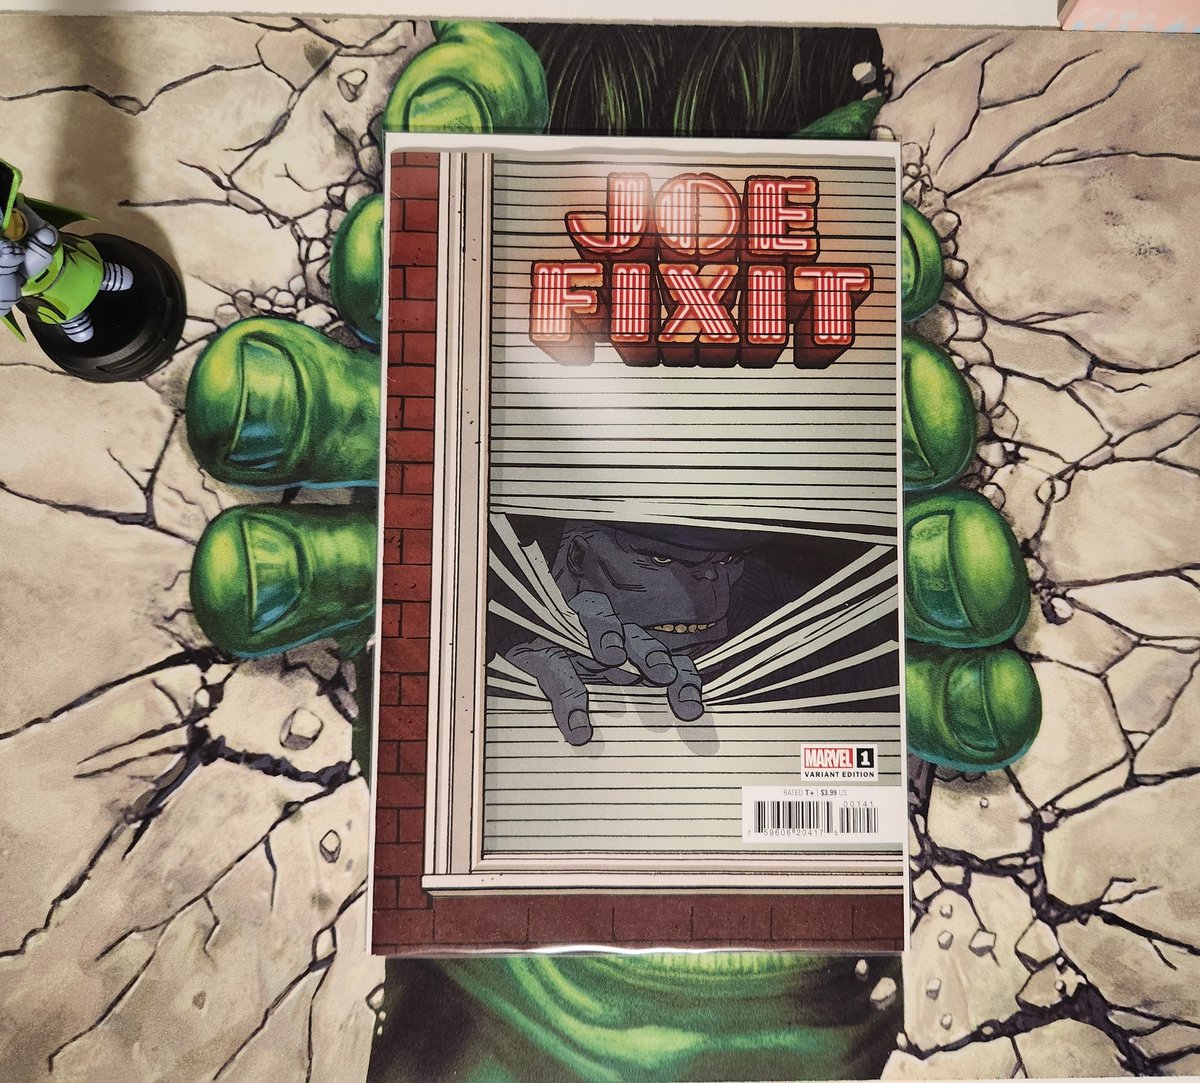 Joe Fixit #1 Windowshades variant written by Peter David.

#NewComicBookDay
#JoeFixit
#PeterDavid
#Hulk